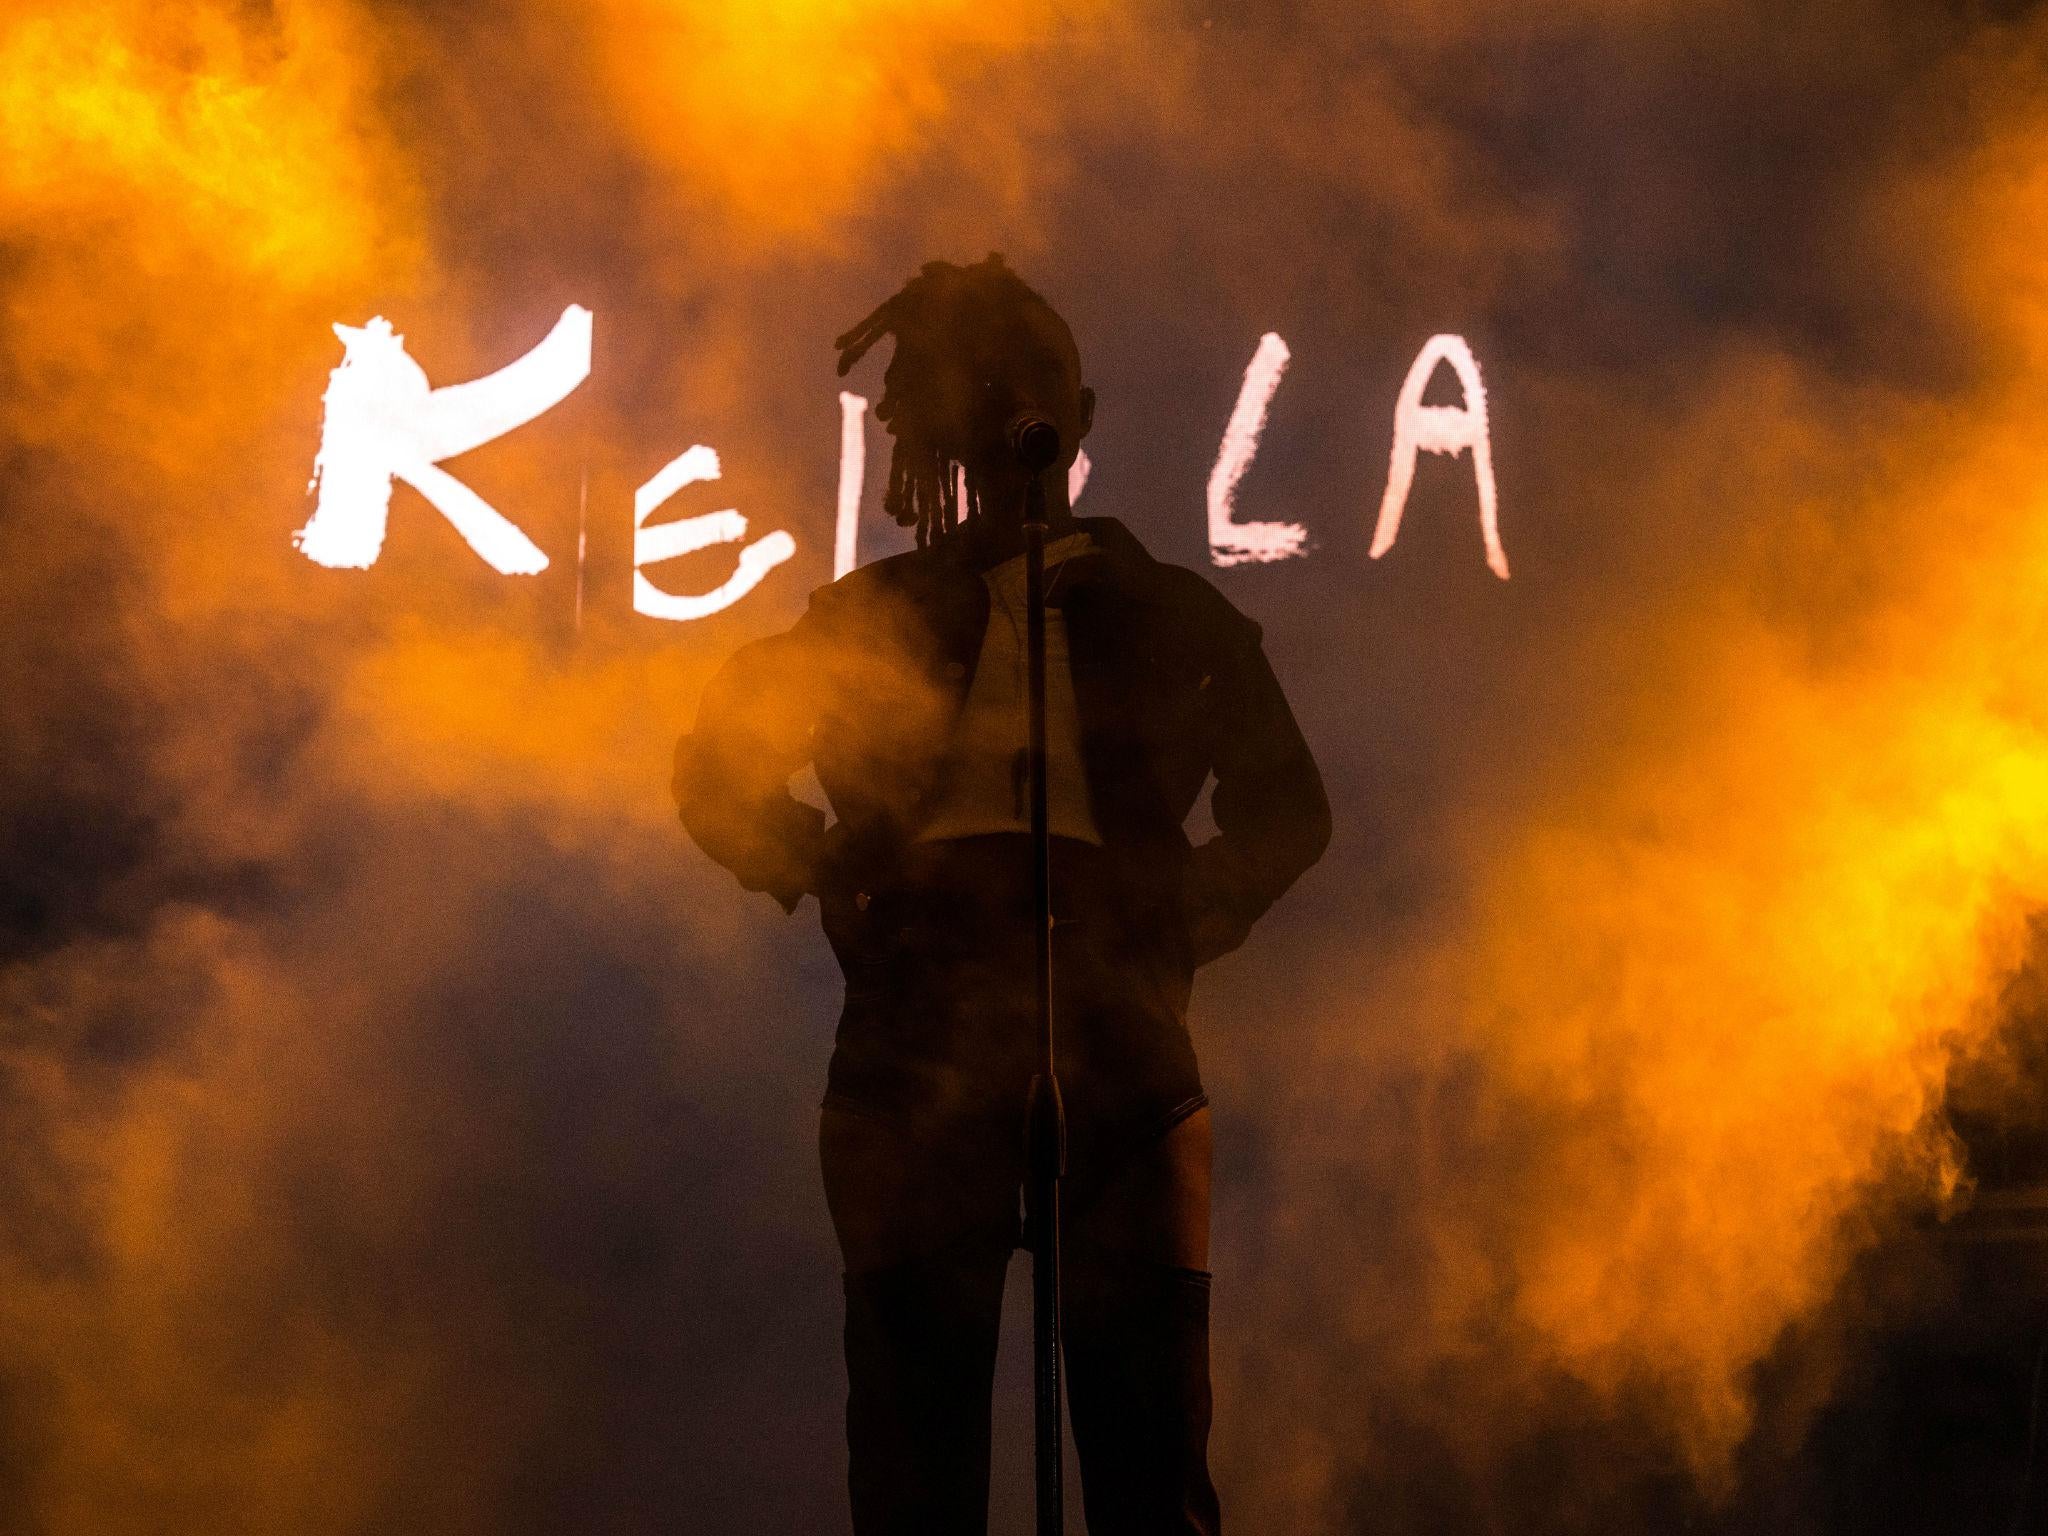 Kelela performs at Full Moon Festival